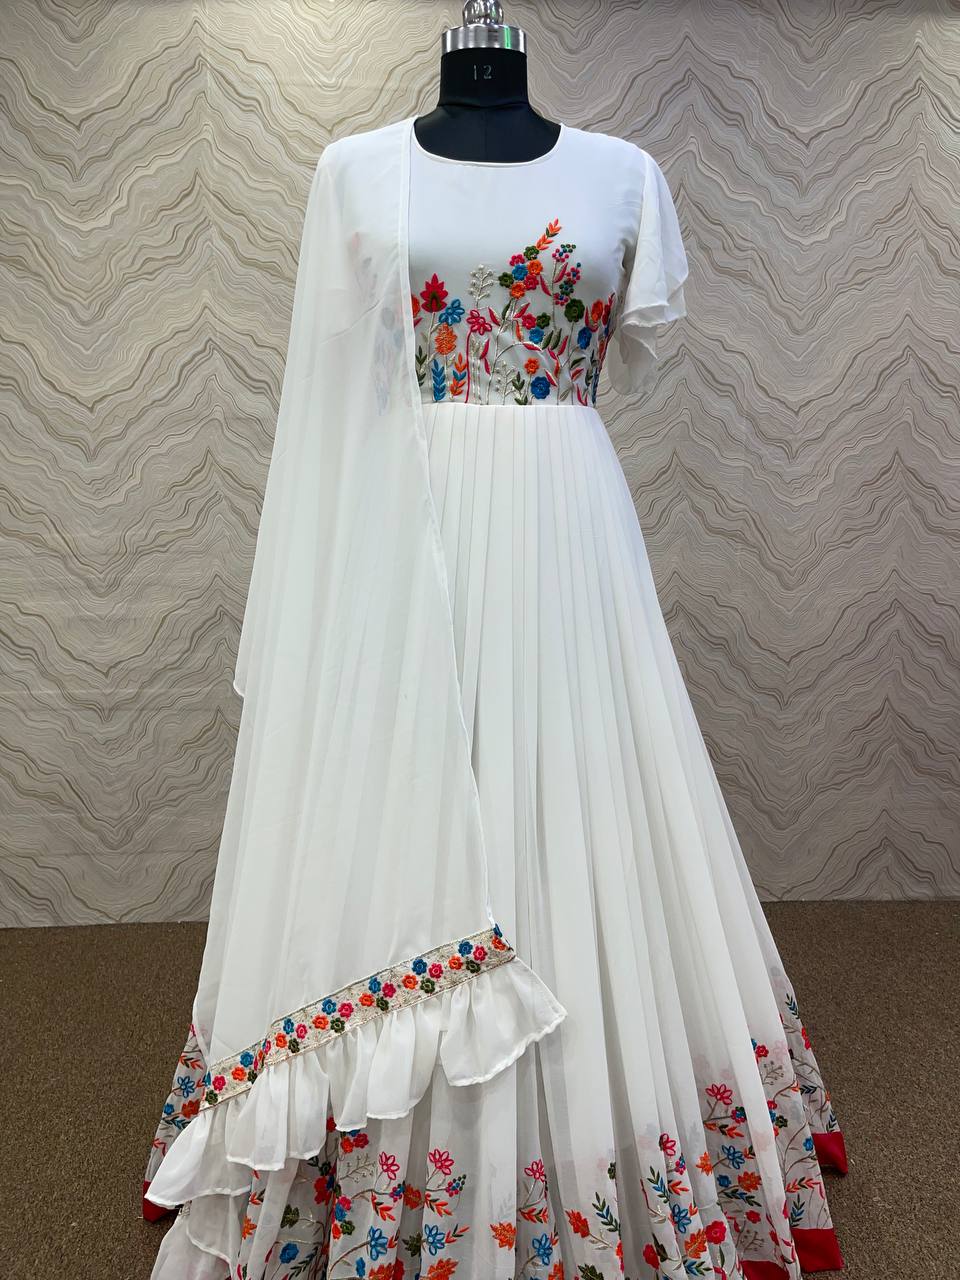 Biba Women's Off White Cotton Anarkali Kurta Churidar Suit Set : Amazon.in:  Fashion